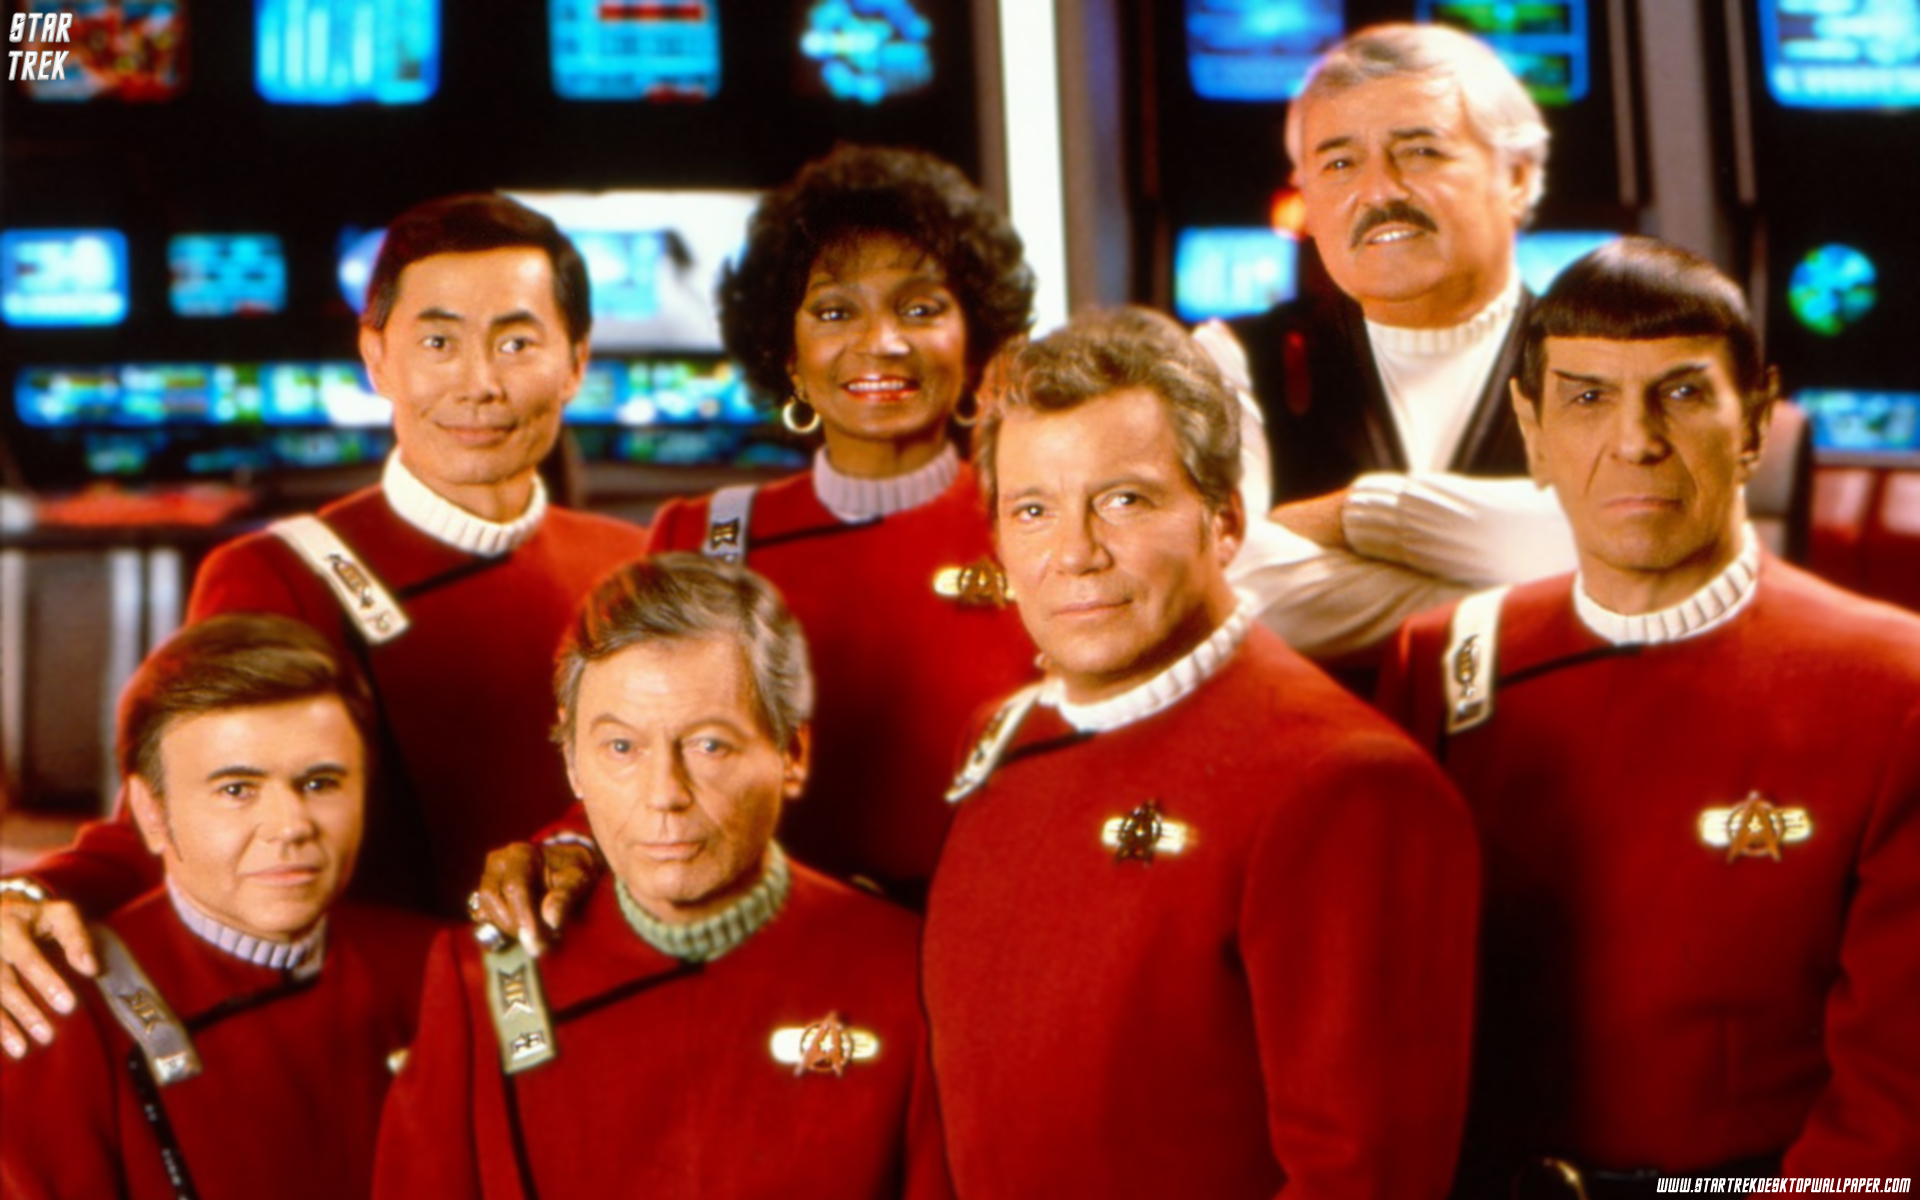 - Star Trek Original Serie Crew - free Star Trek computer desktop wallpaper, pictures, images.